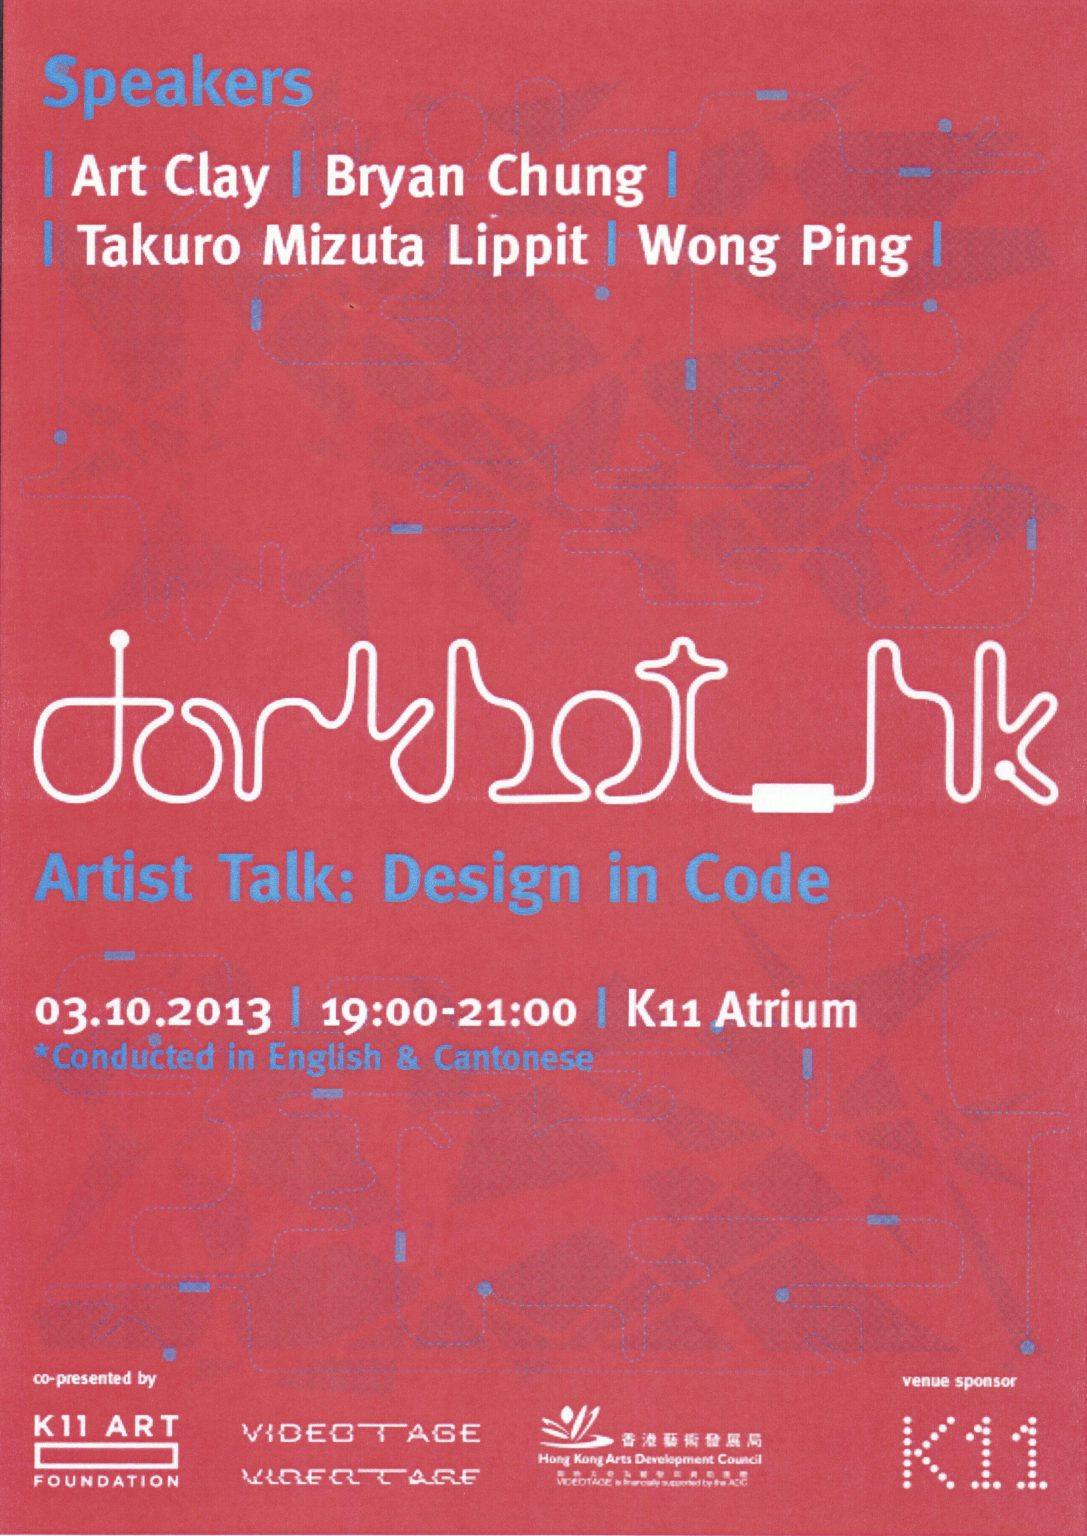 Dorkbot-HK | Design in Code 設計與密碼